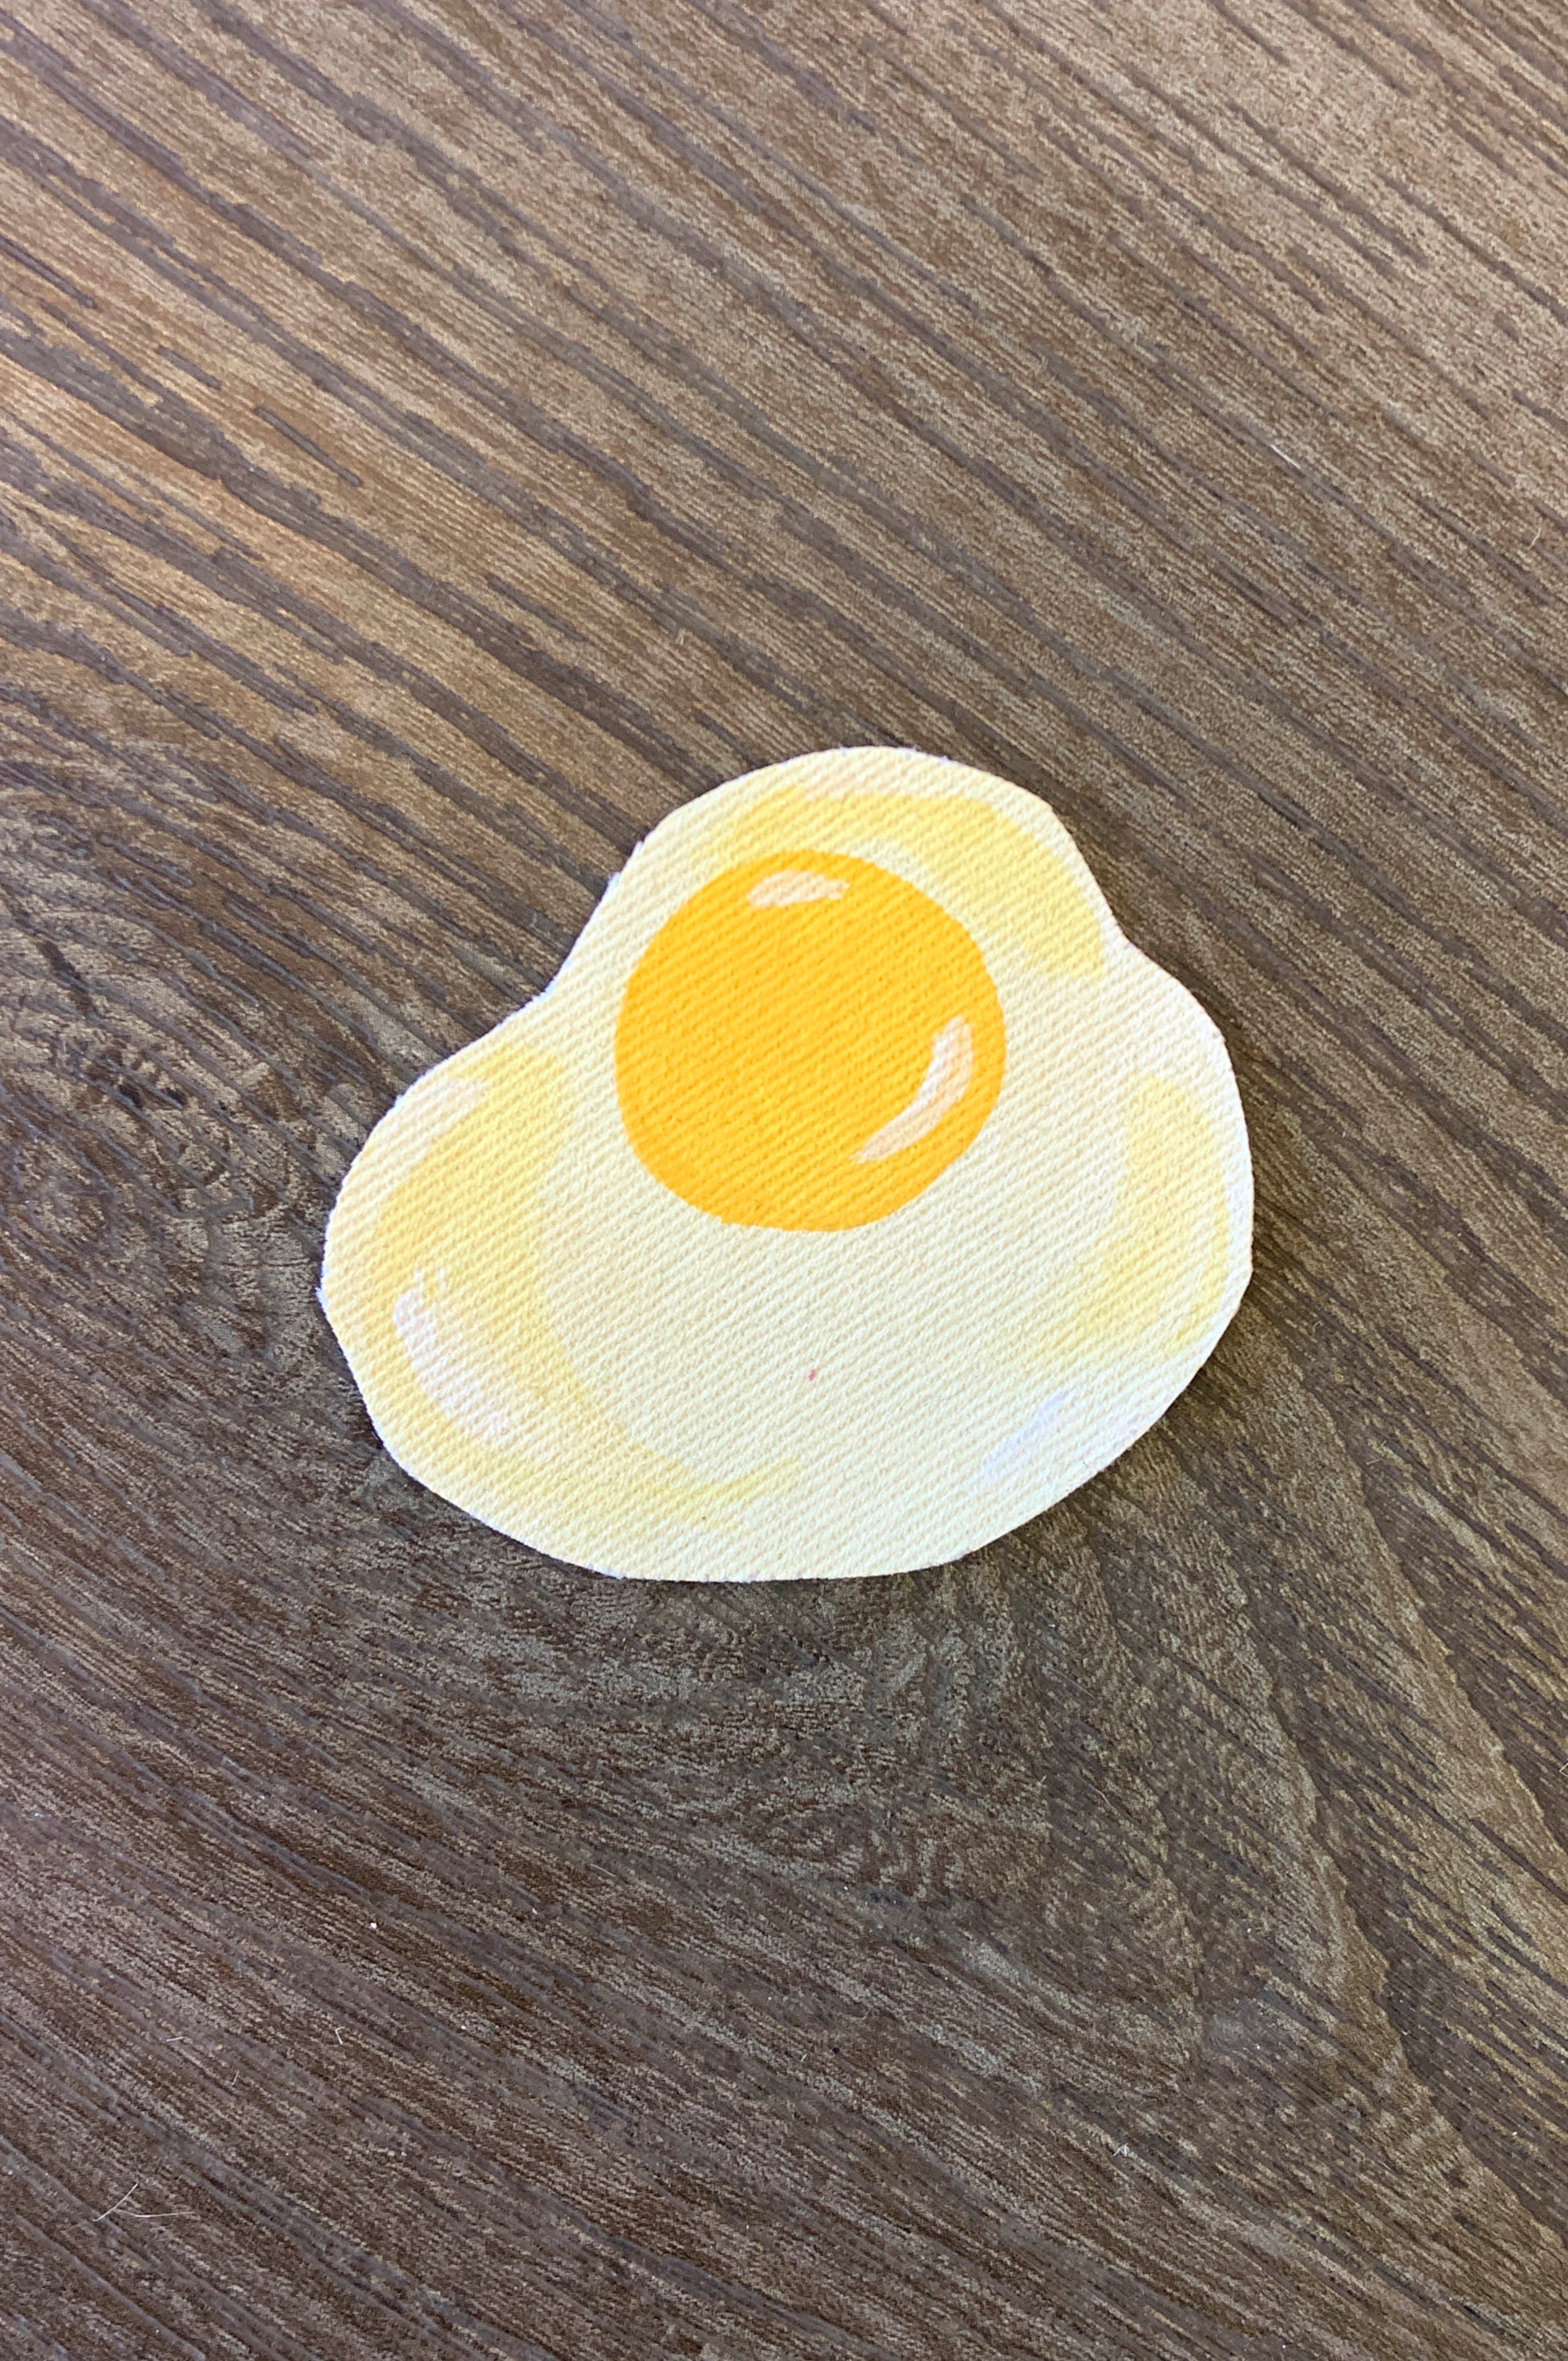 Sunnyside up Egg Patch 2inch